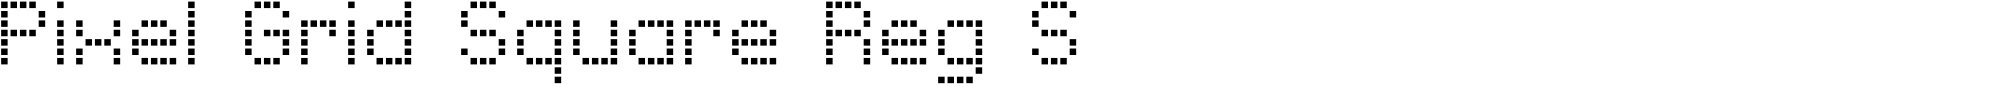 Pixel Grid Square Reg S image